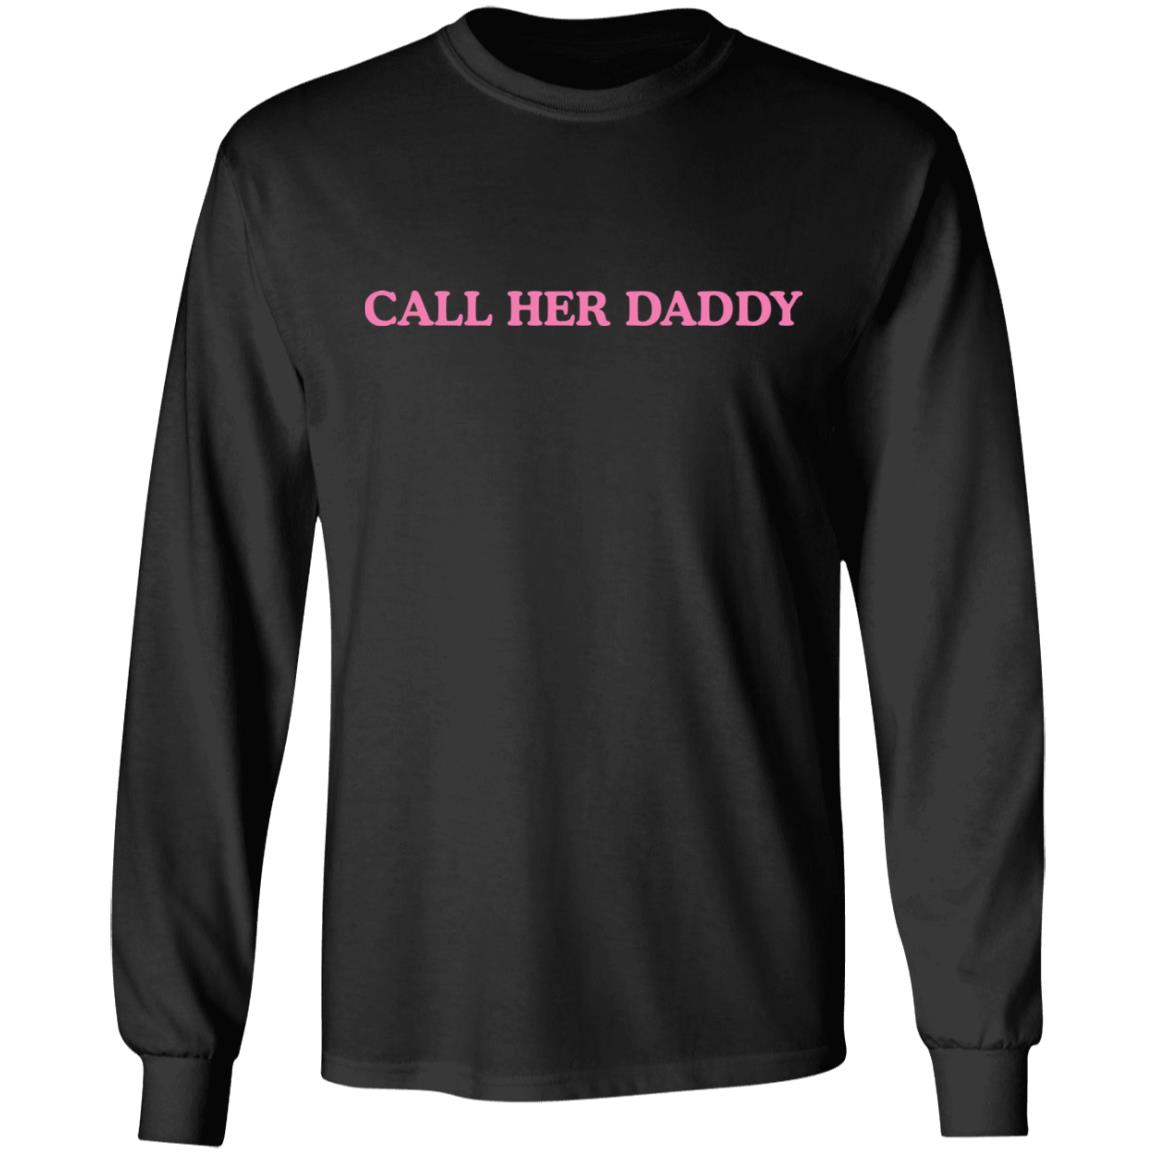 Call her daddy shirt, hoodie, long sleeve